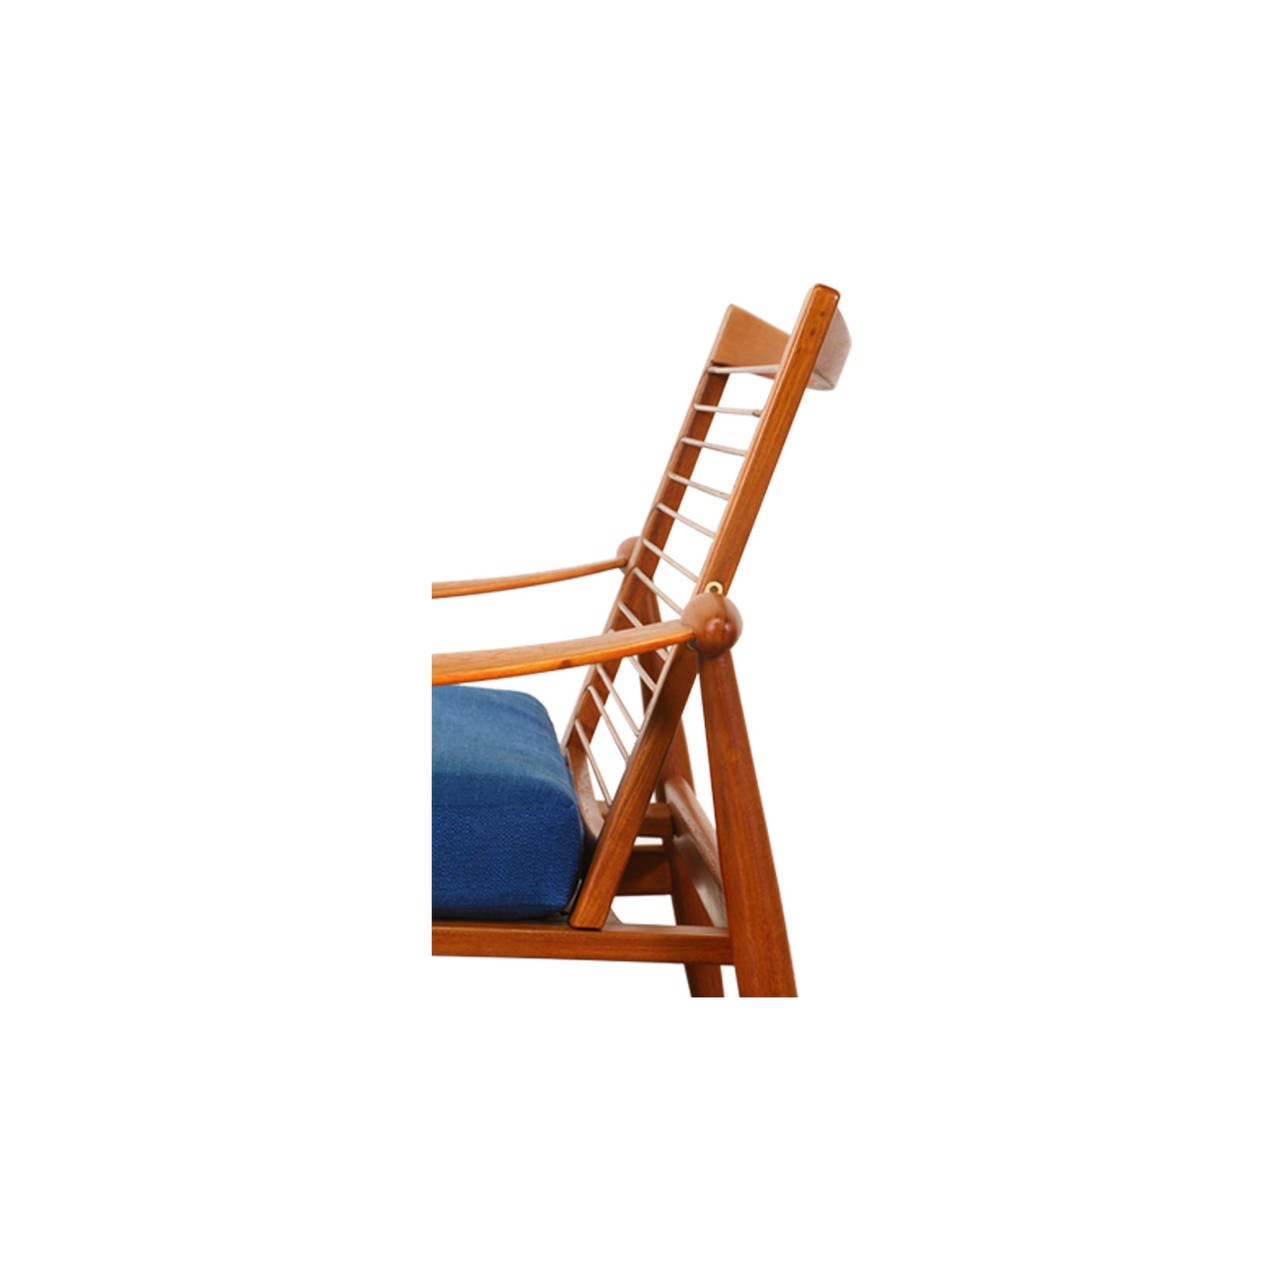 Finn Juhl Model #133 “Spade” Teak Lounge Chairs for France & Son 1